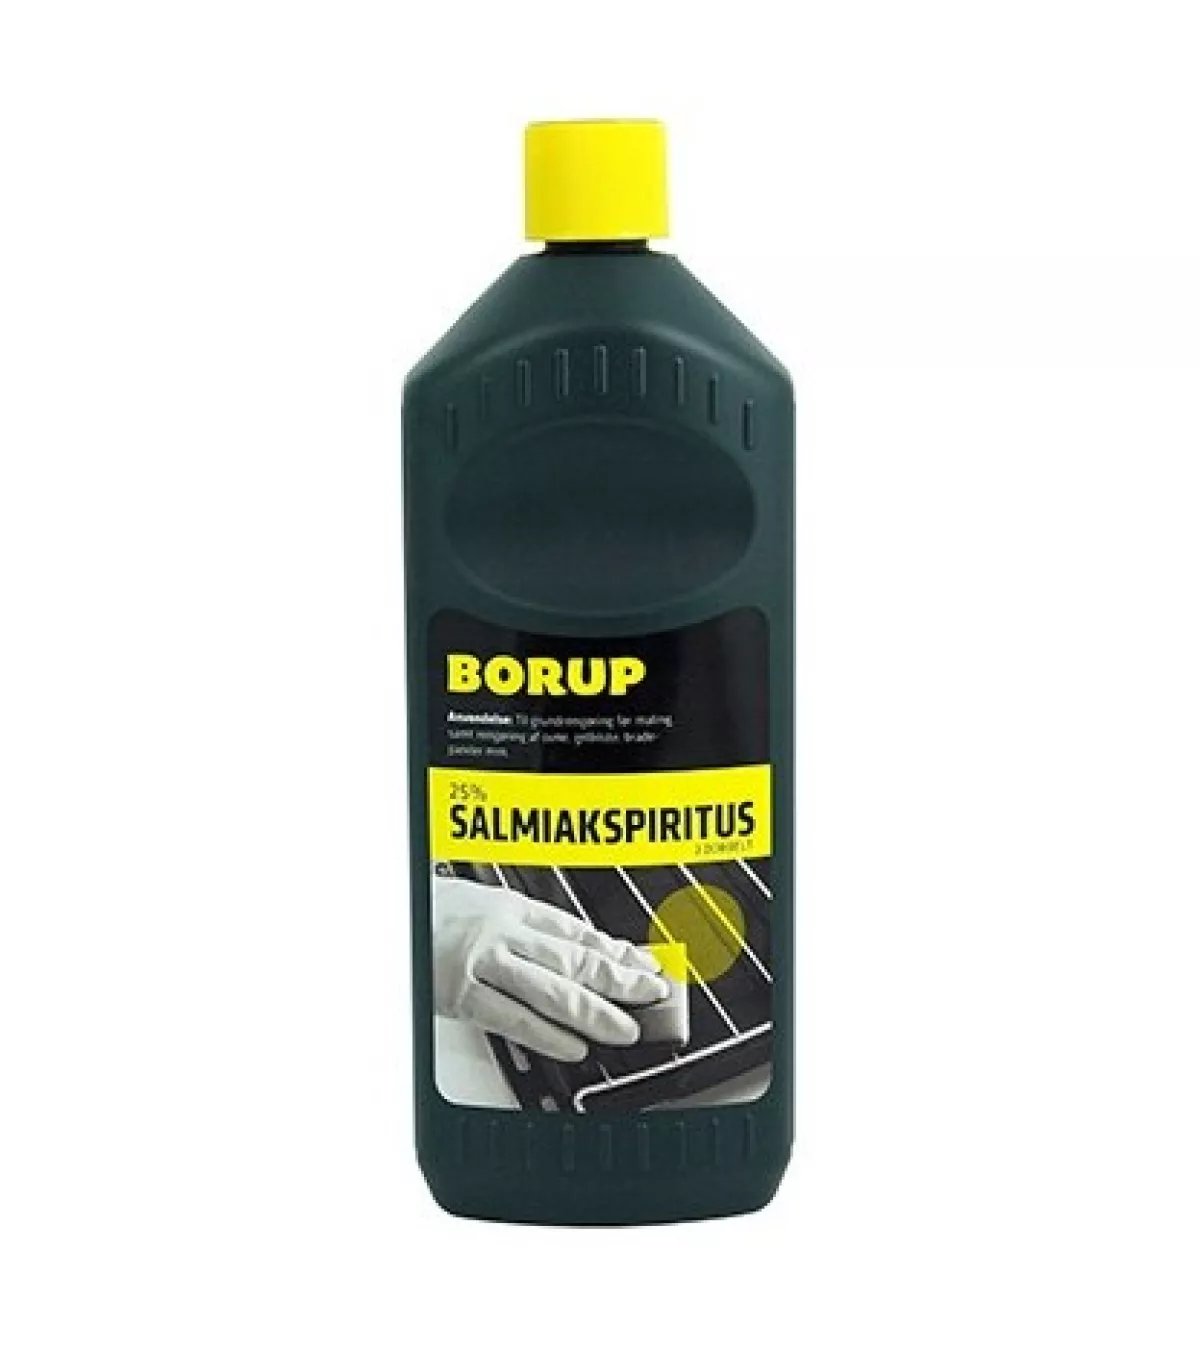 #1 - Borup salmiakspiritus under 25%. Dunk med 1 liter